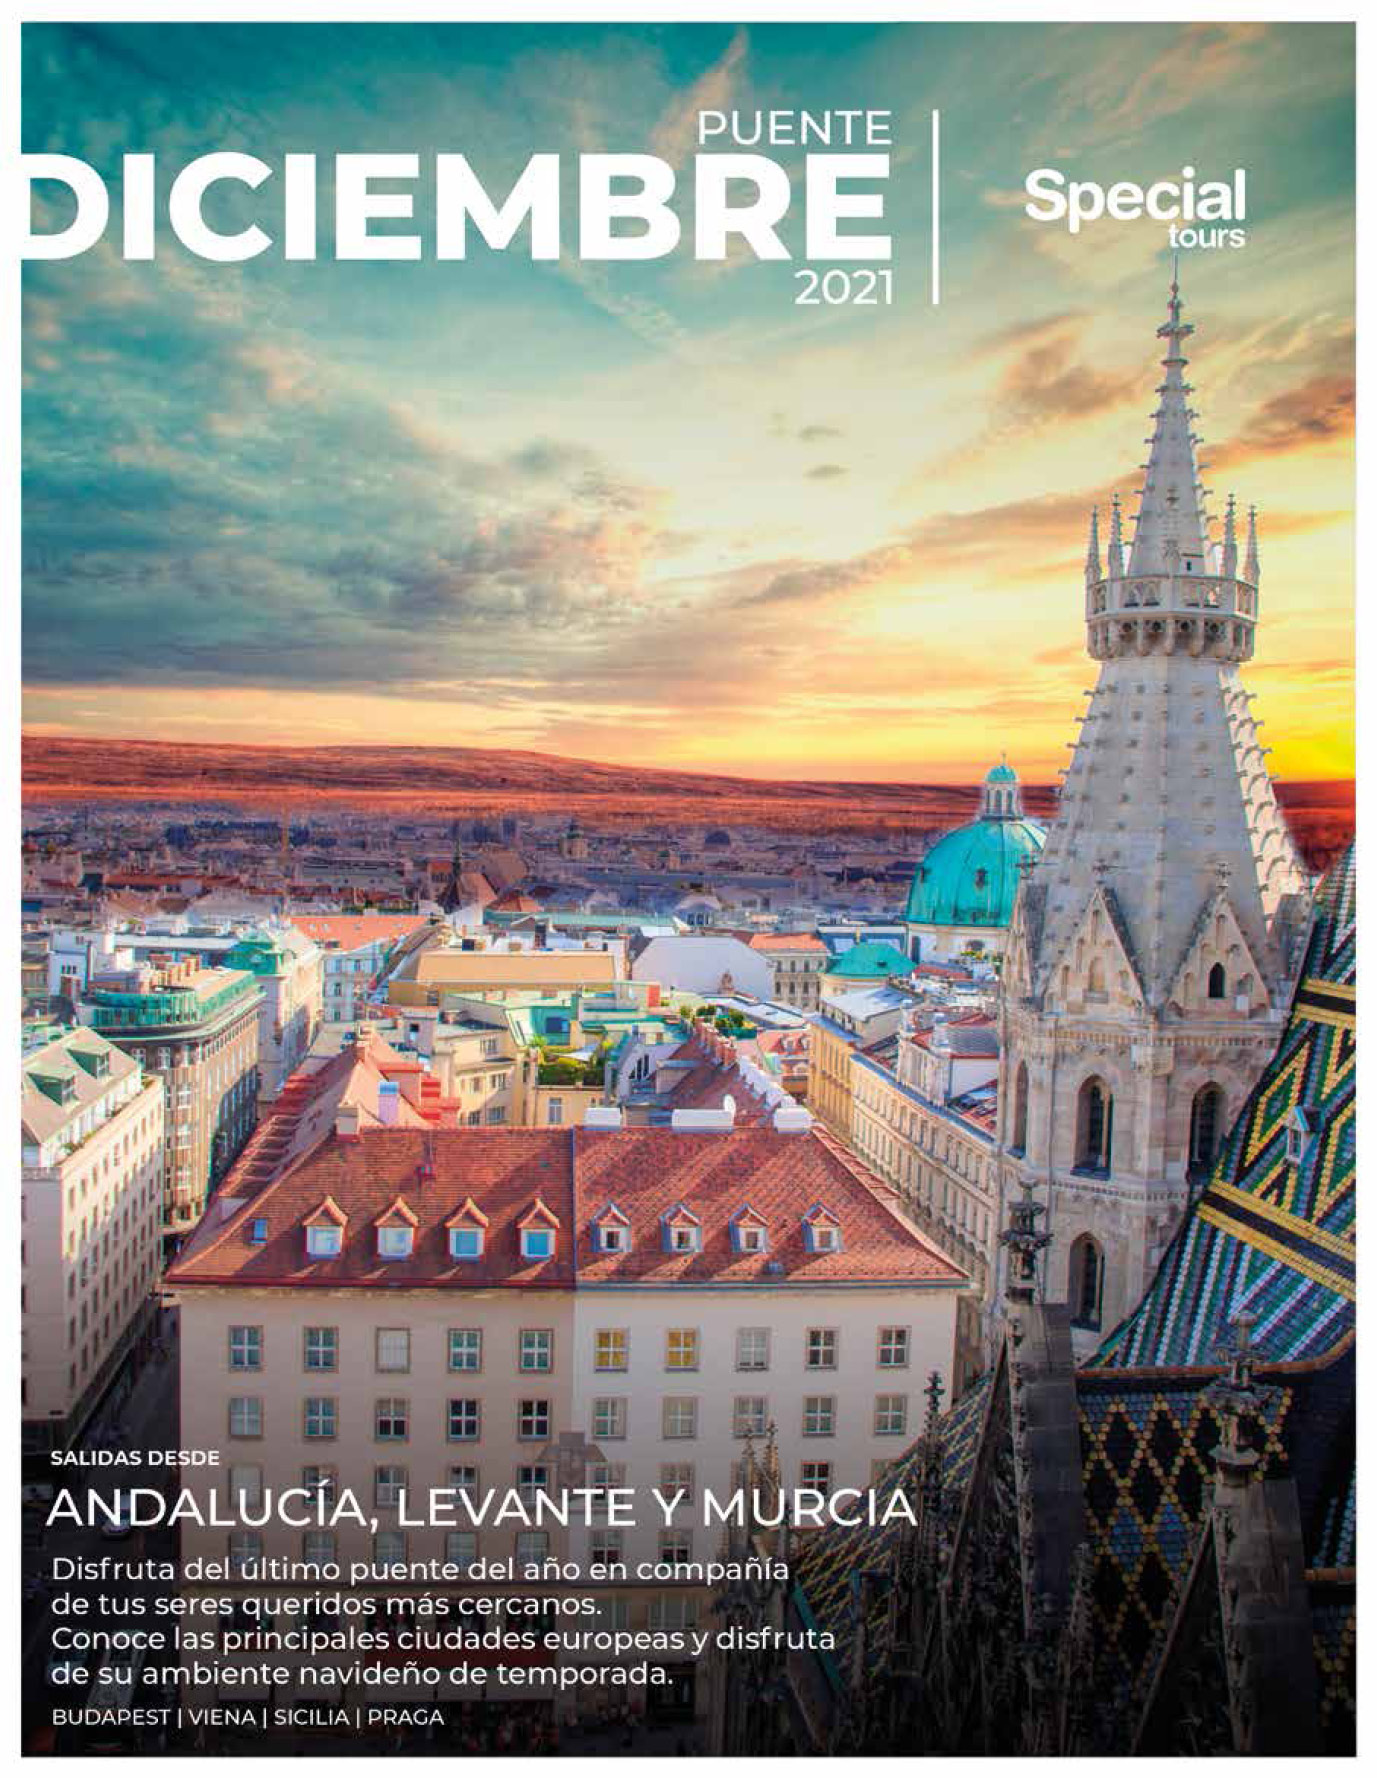 Catalogo Special Tours Puente de Diciembre 2021 en Europa salidas con vuelos directos desde Andalucia Levante y Murcia